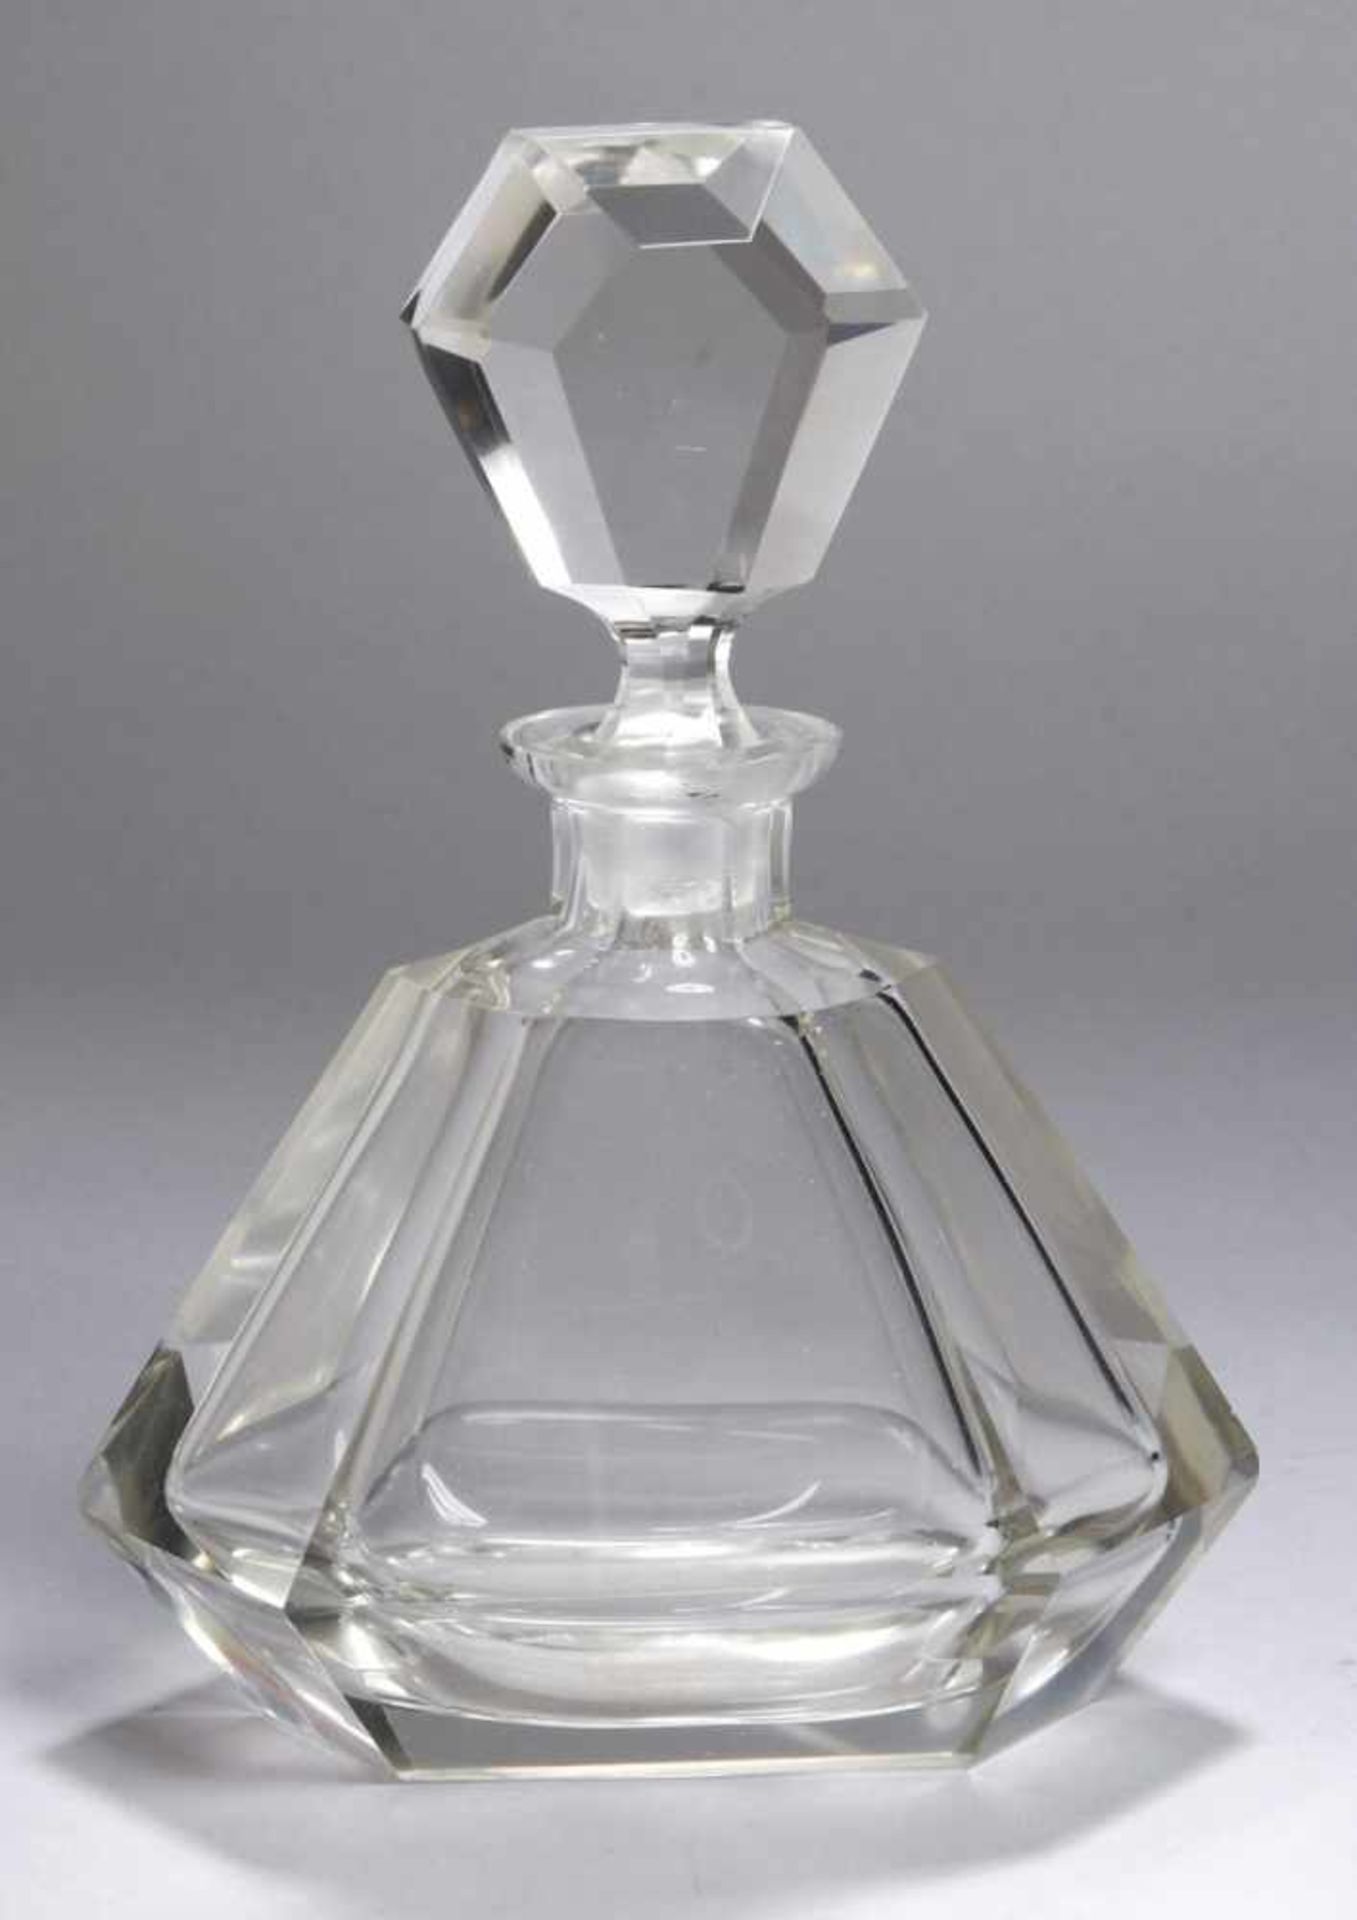 Glas-Karaffe, 20/30er Jahre, farbloses Glas, rundum facettierter Korpus und Stöpsel, H 23cm, innerer